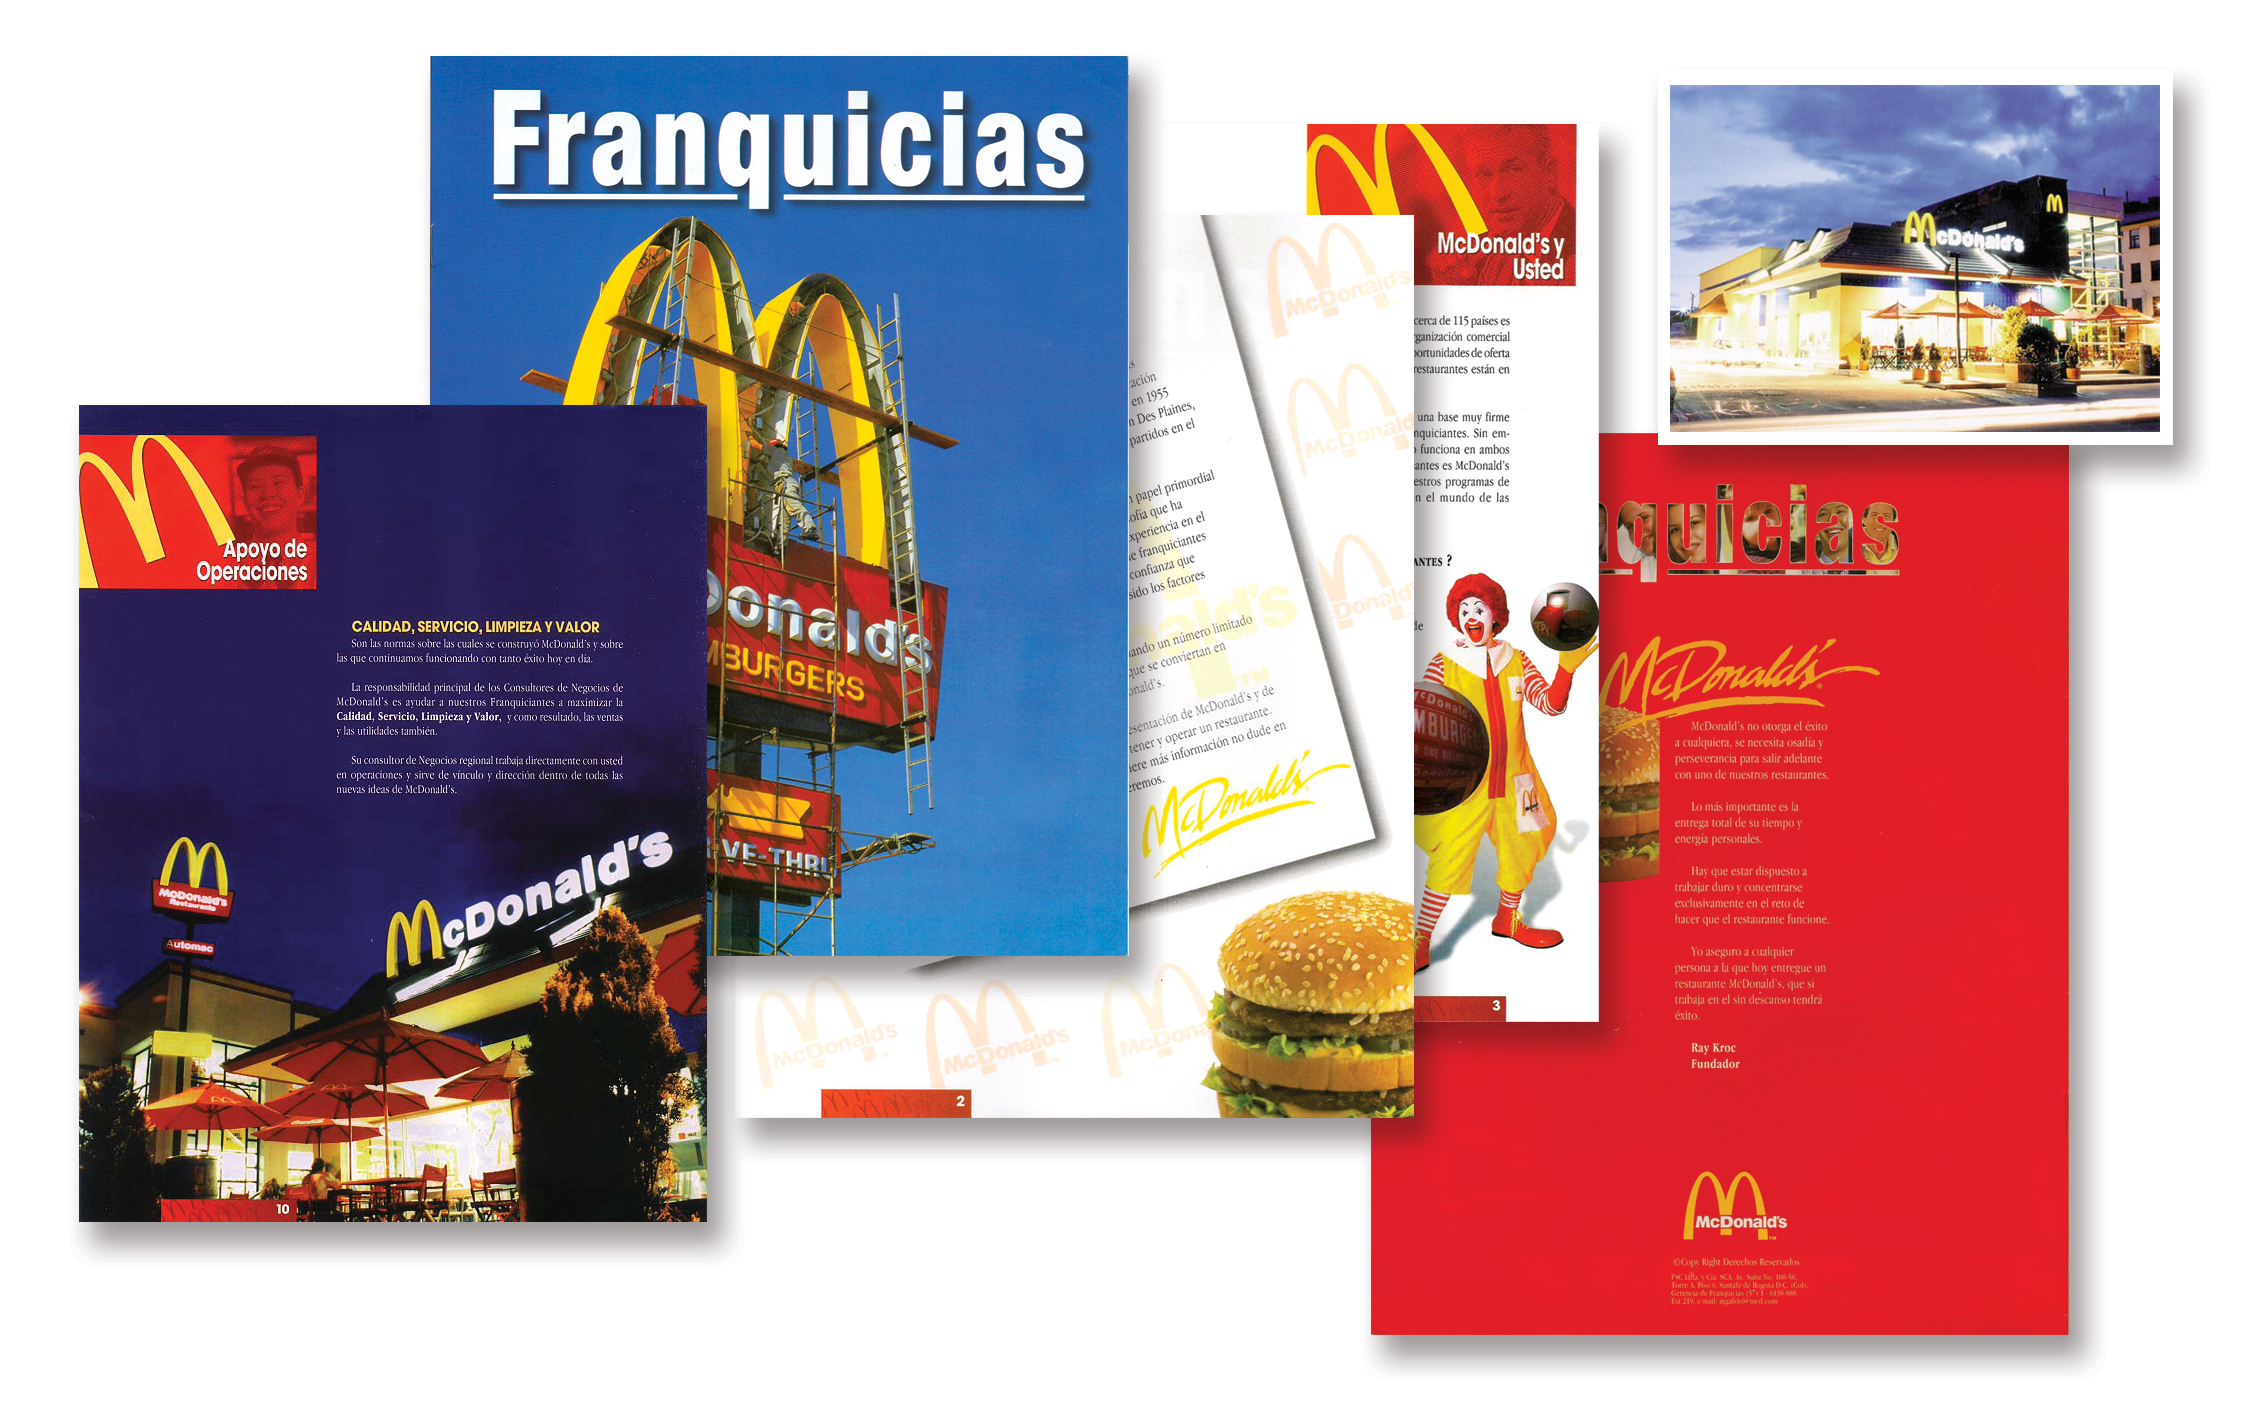 McDonald's Franchise Marketing Materials